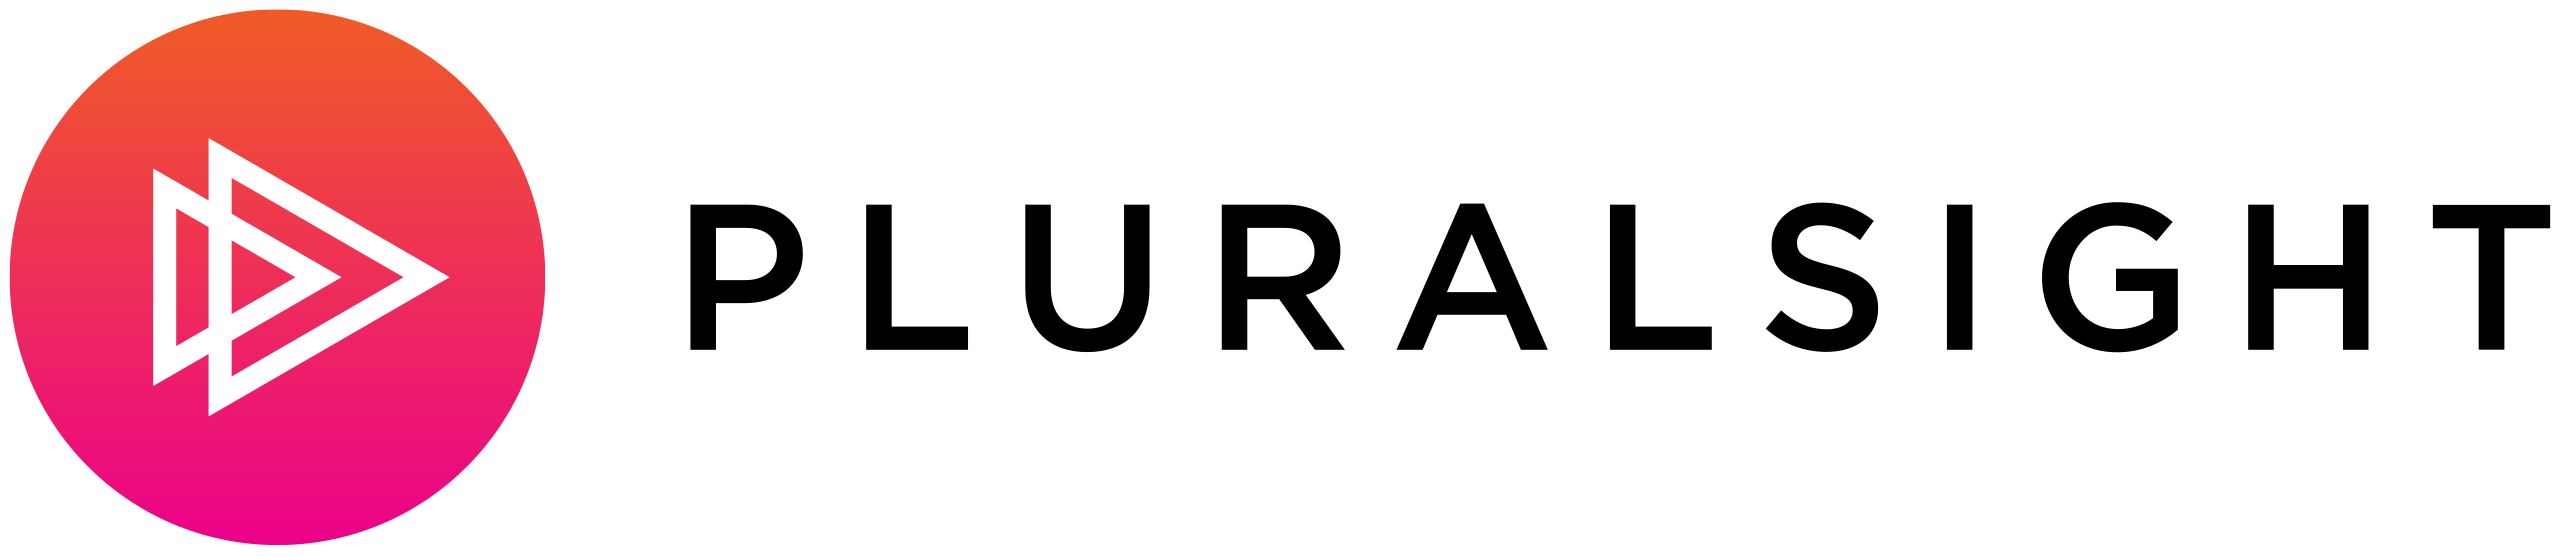 Pluralsight's logo